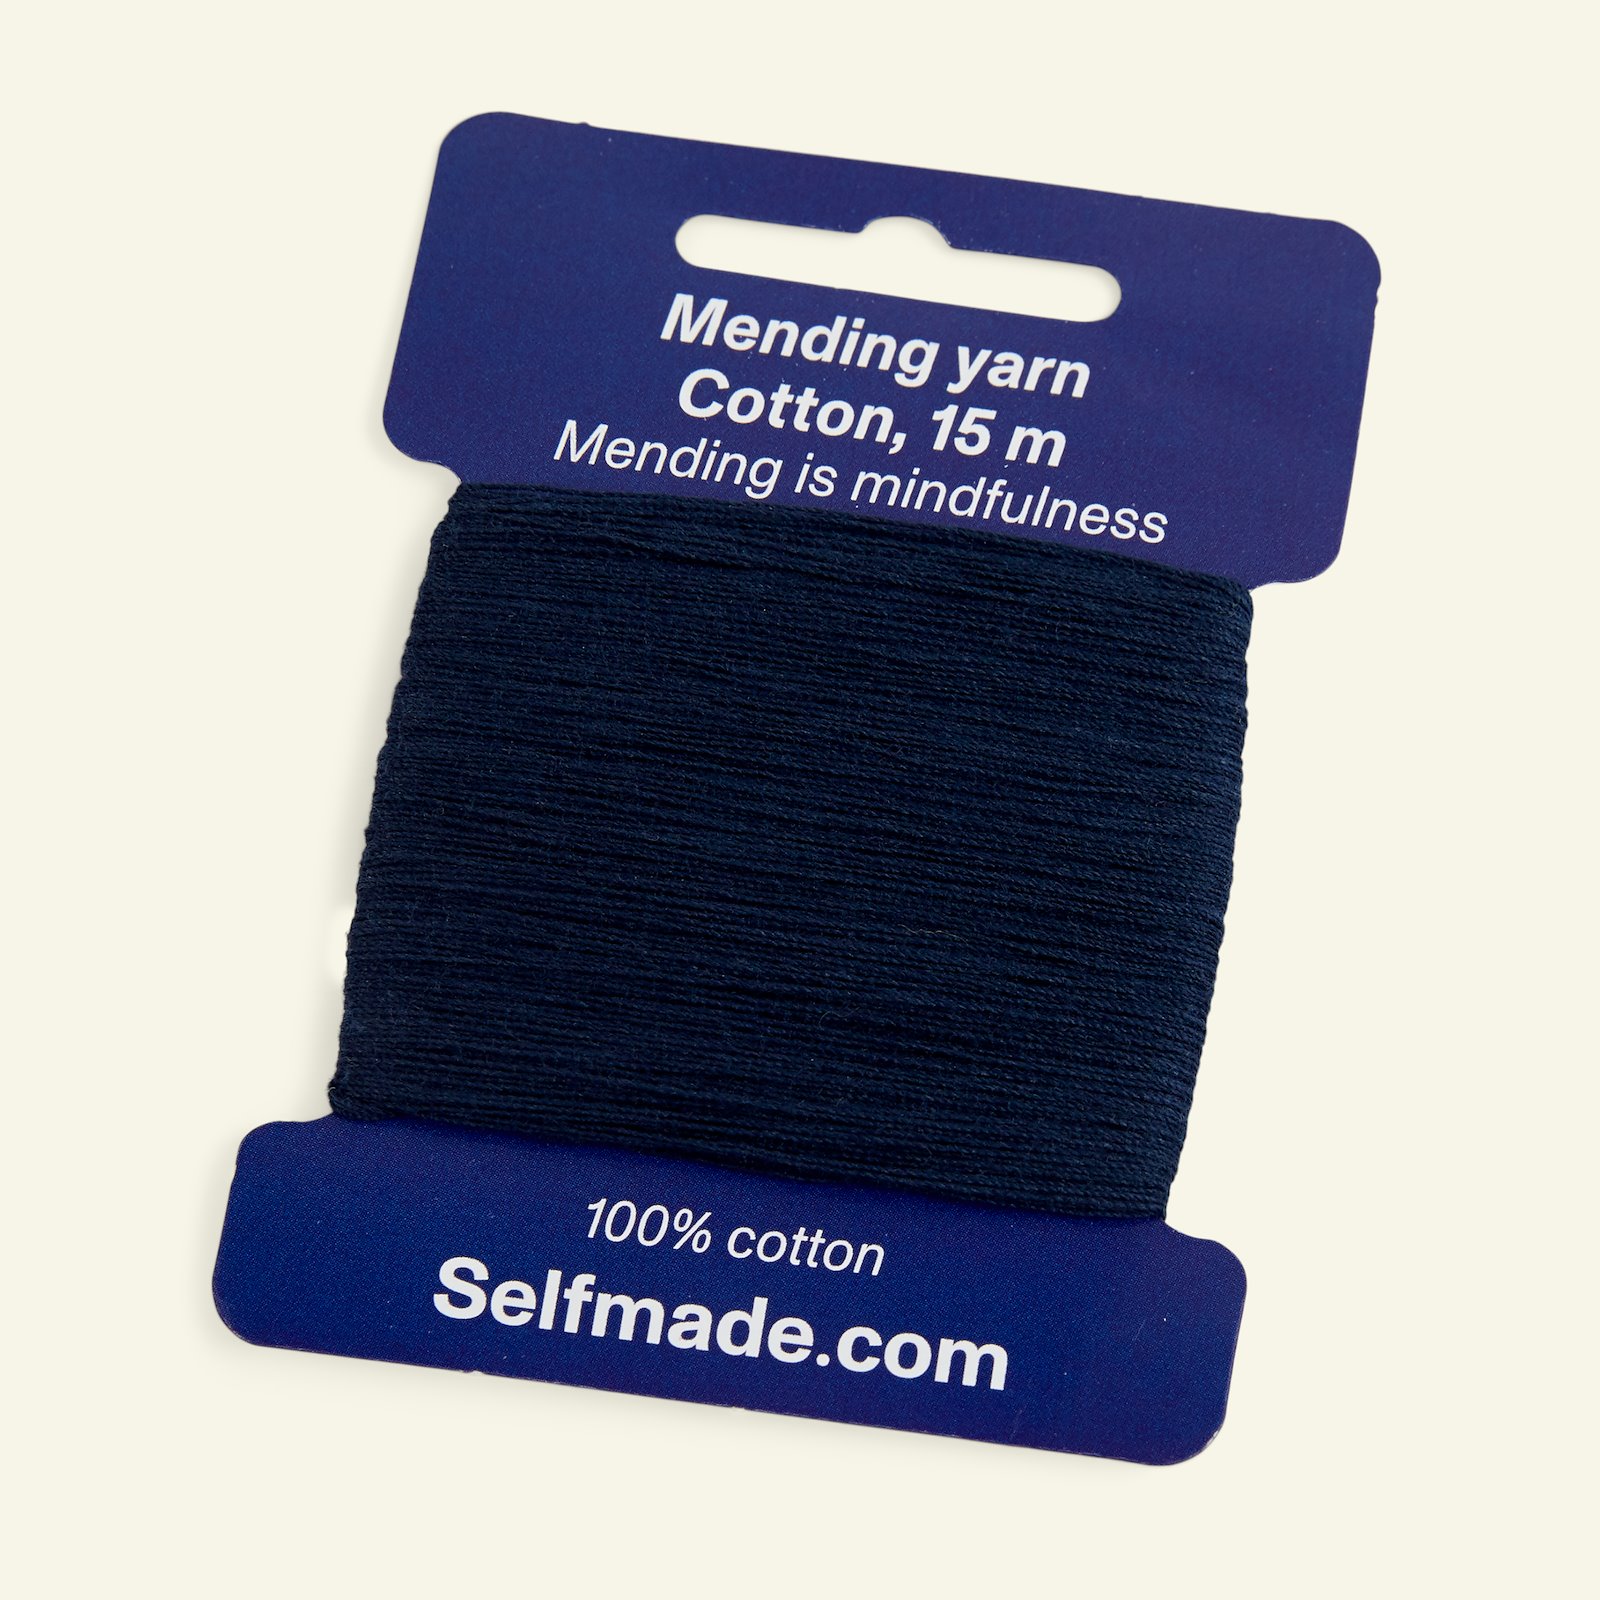 Mending yarn cotton dark navy 15m 35556_pack